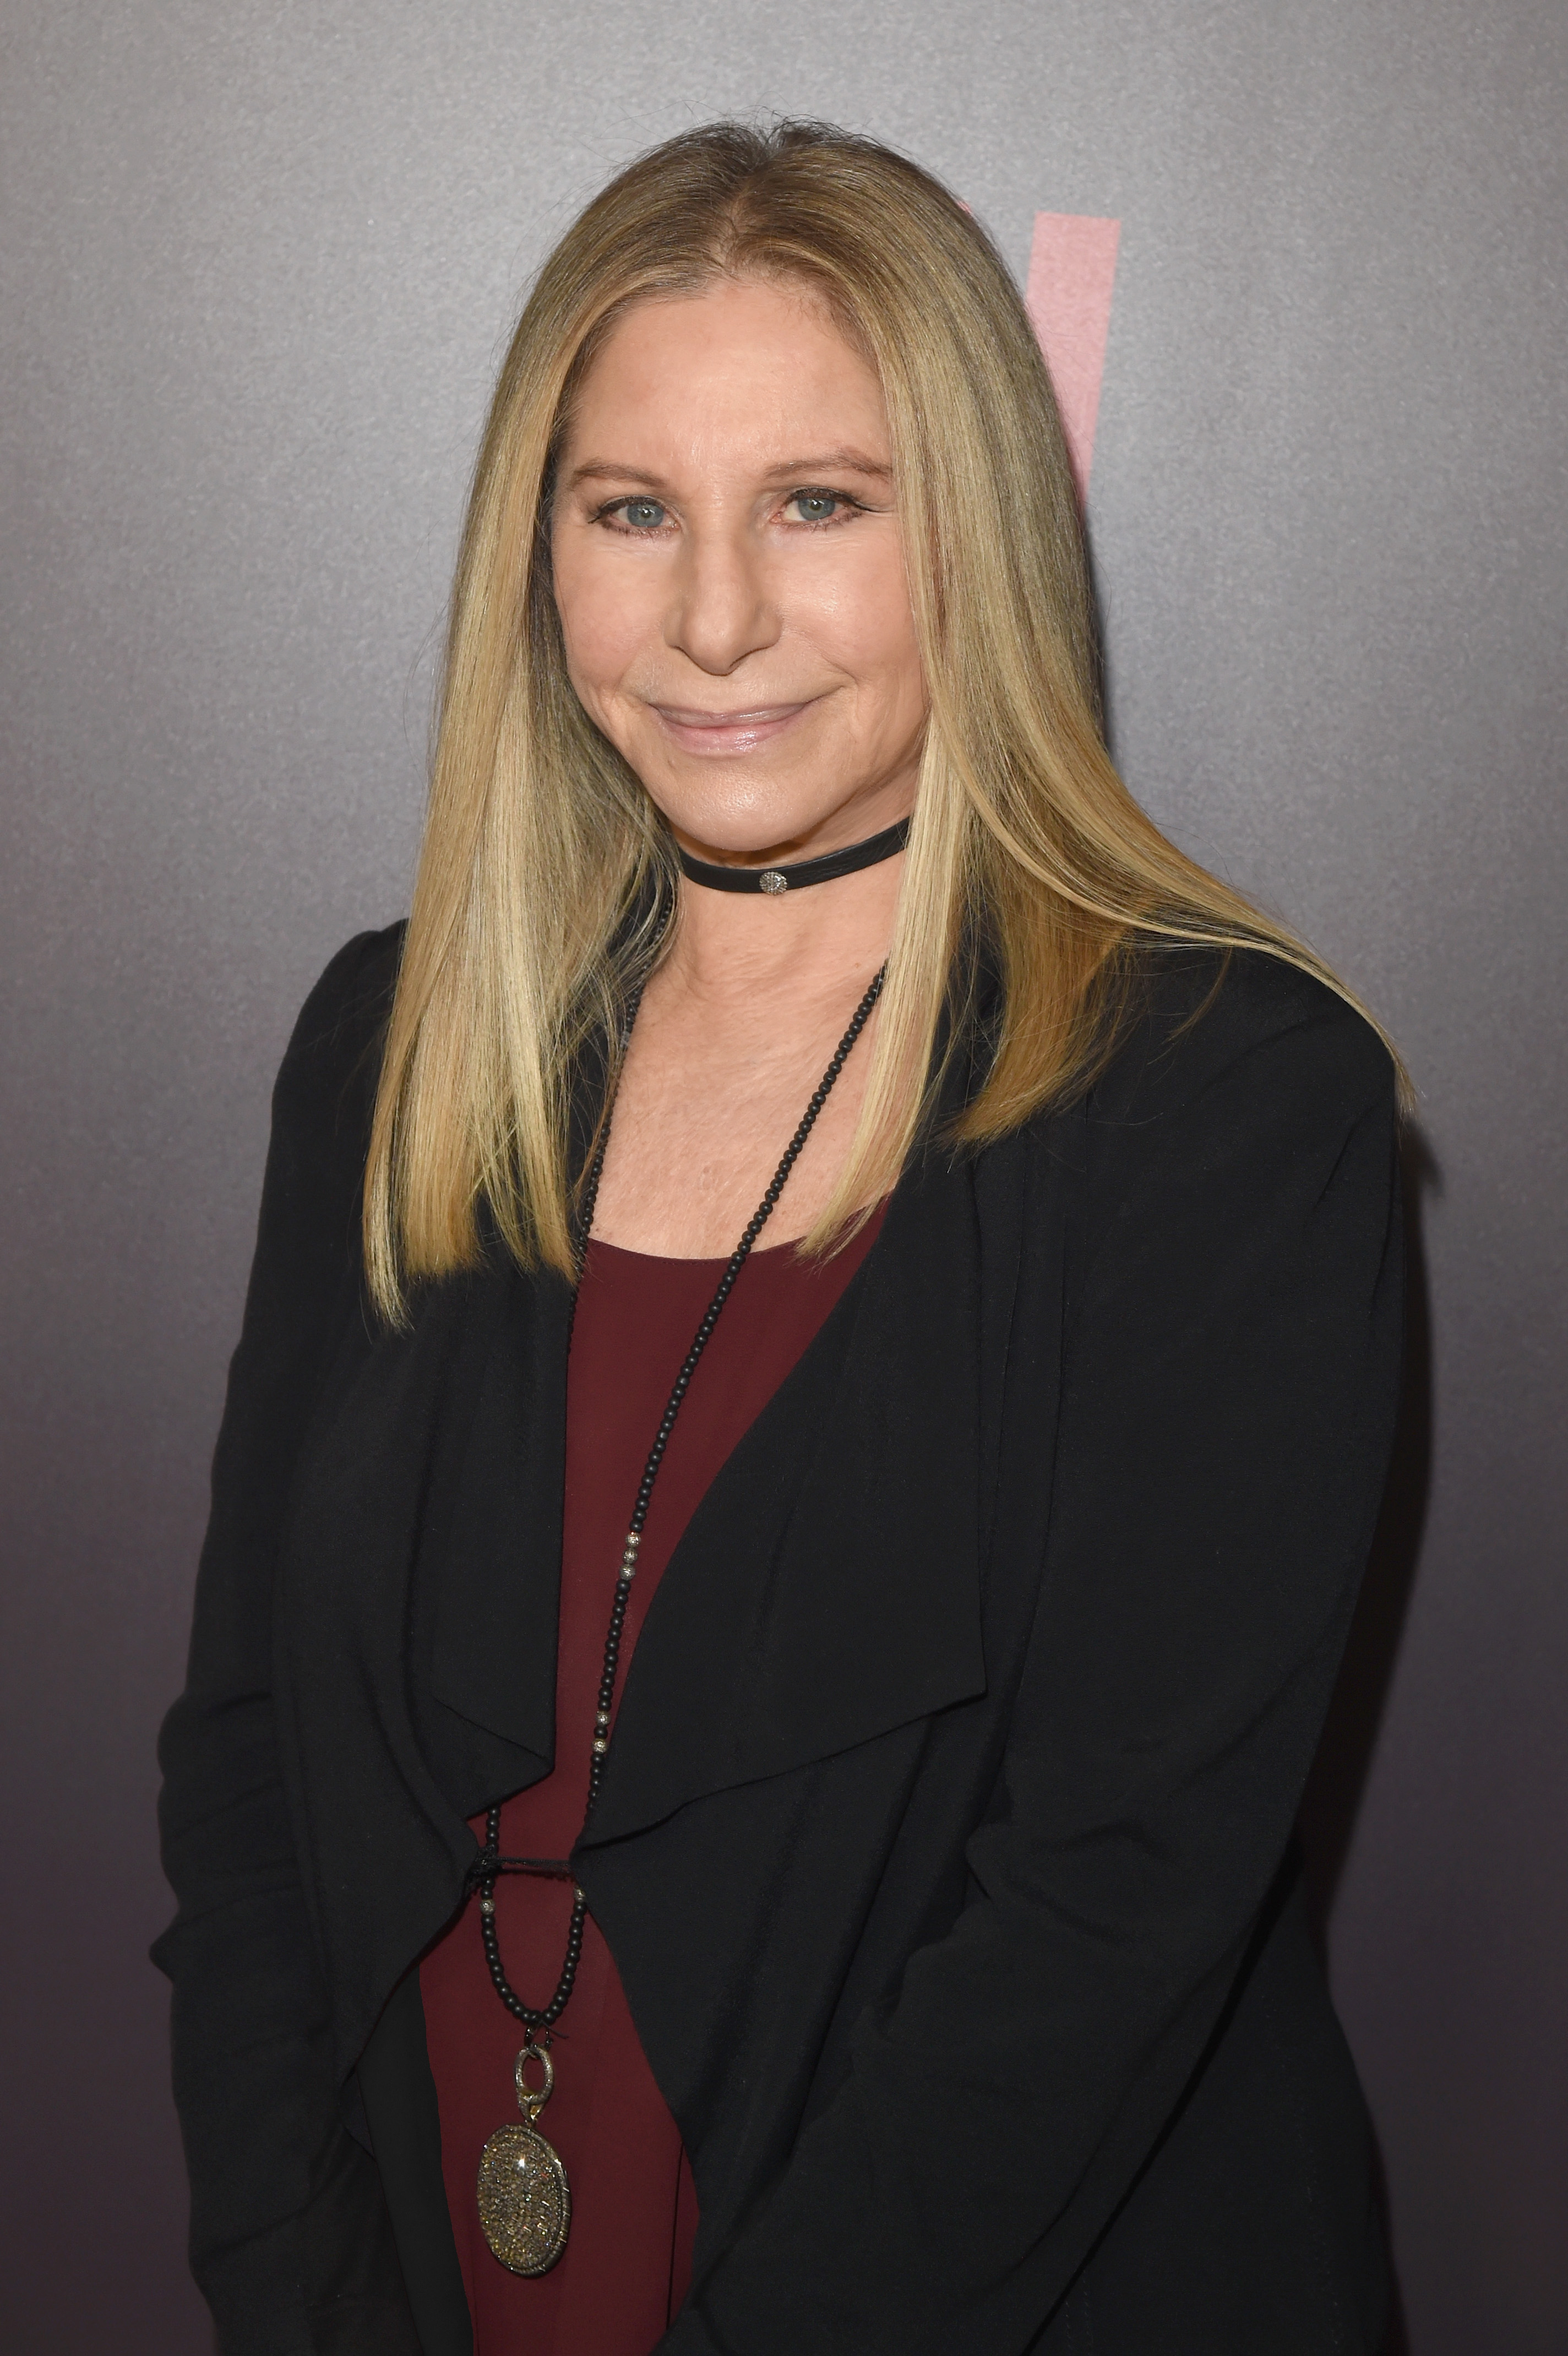 Barbra Streisand in Los Angeles in 2018 | Source: Getty Images